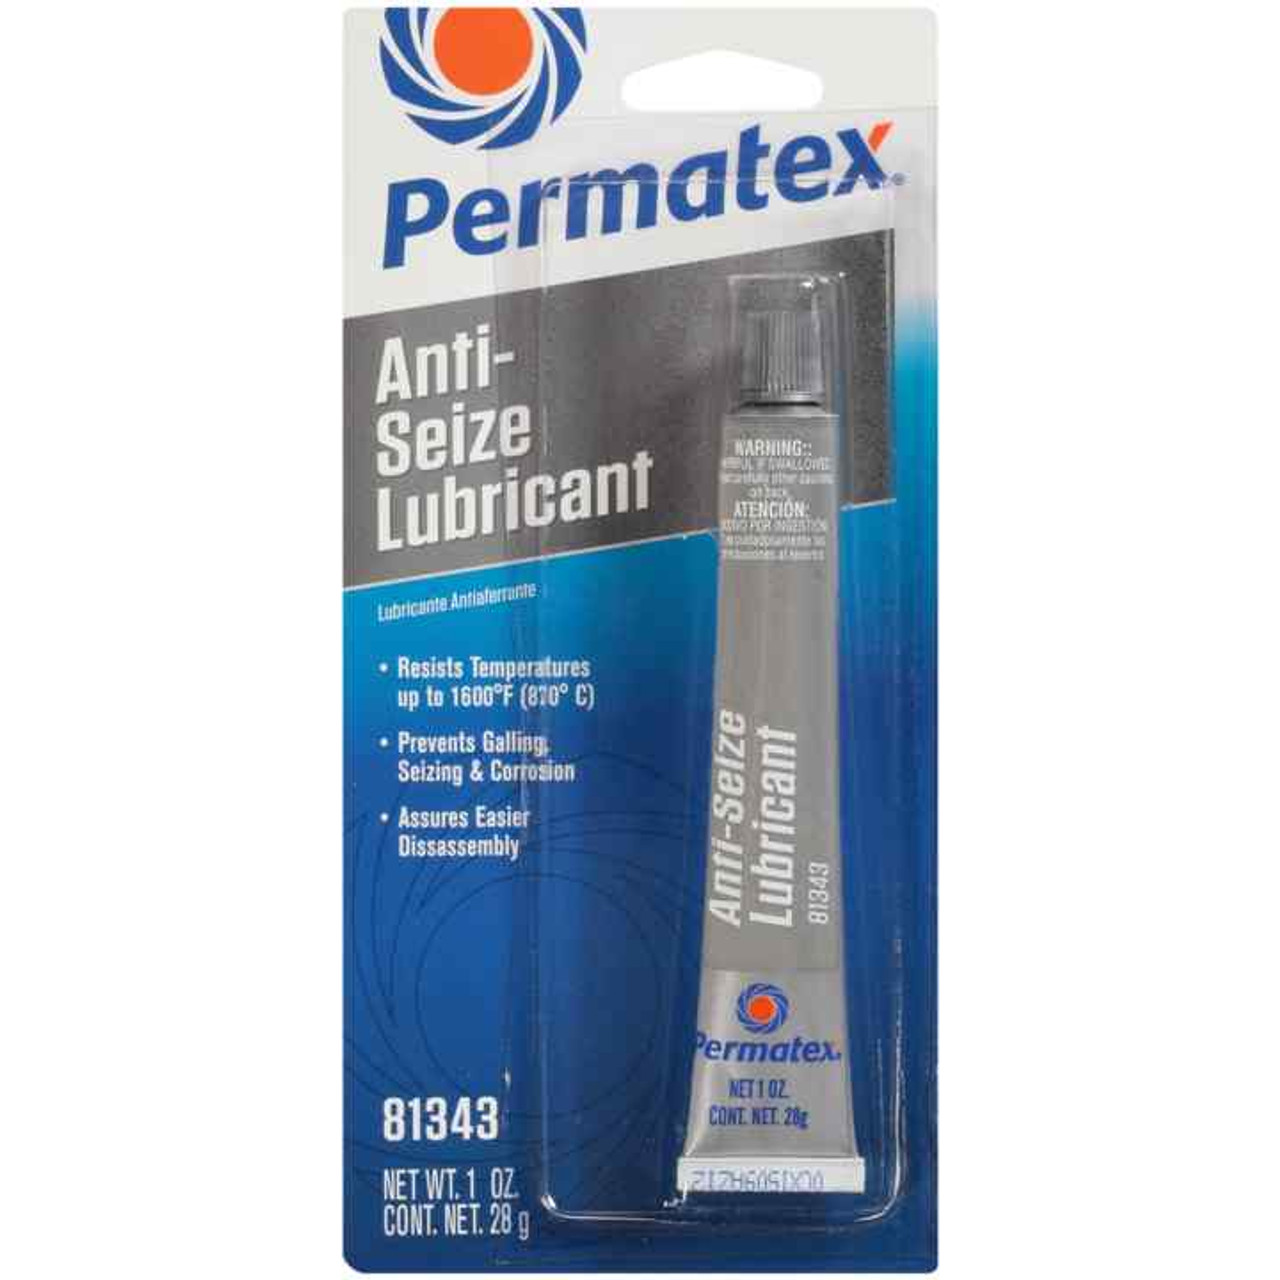 Permatex Anti-Seize Lubricant- 1oz Tube Bottle (81343)